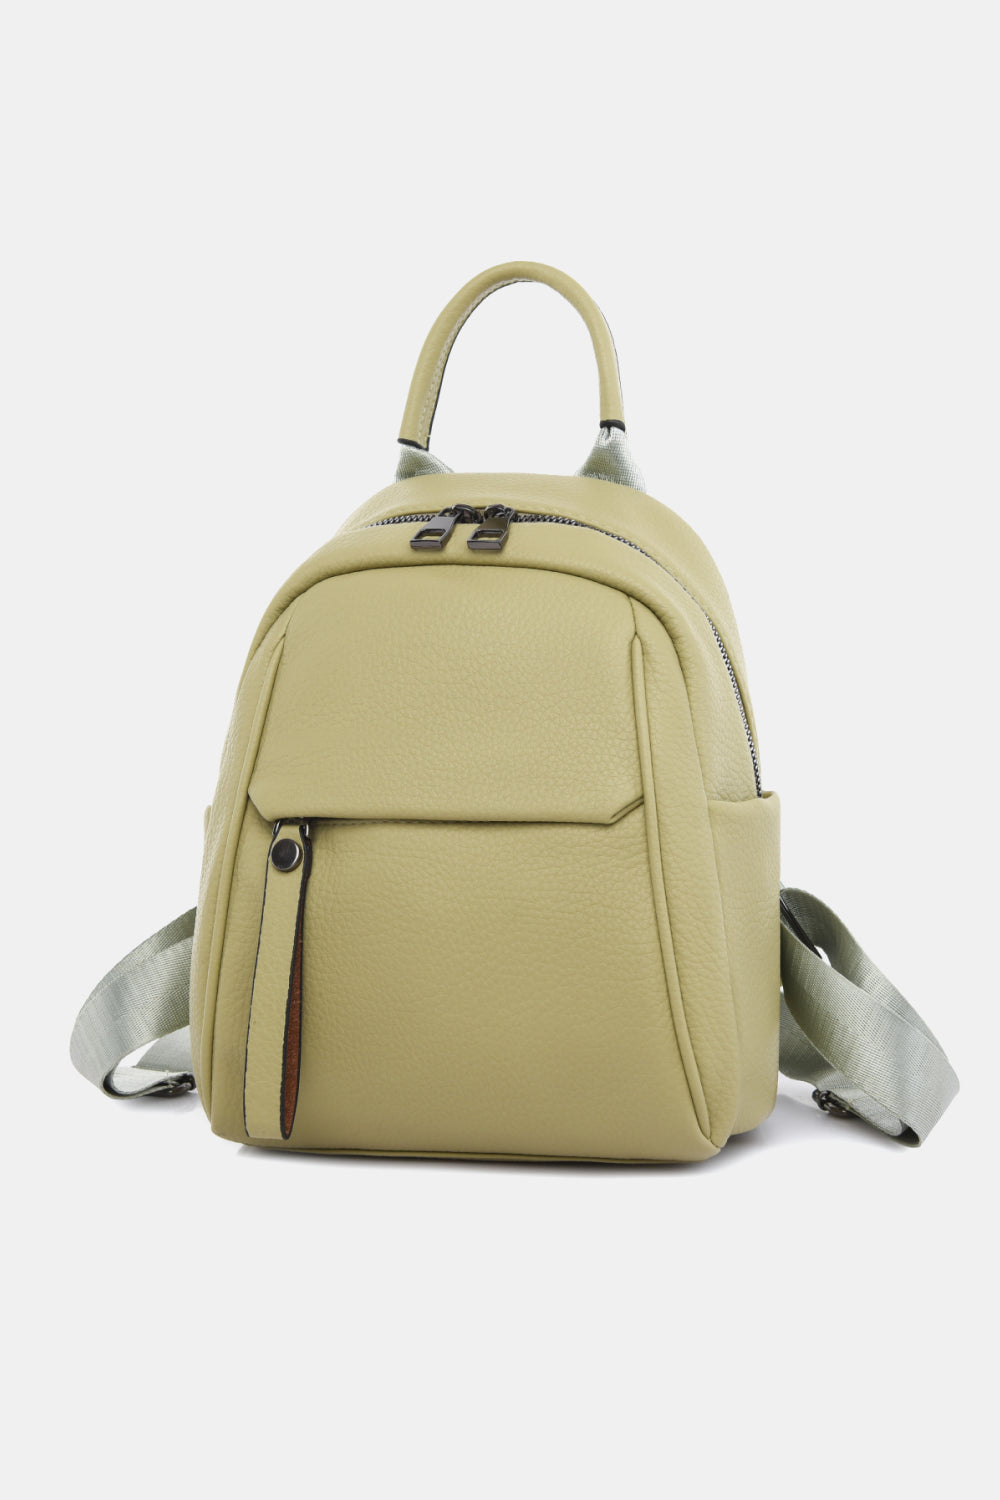 Beige Small PU Leather Backpack Handbags